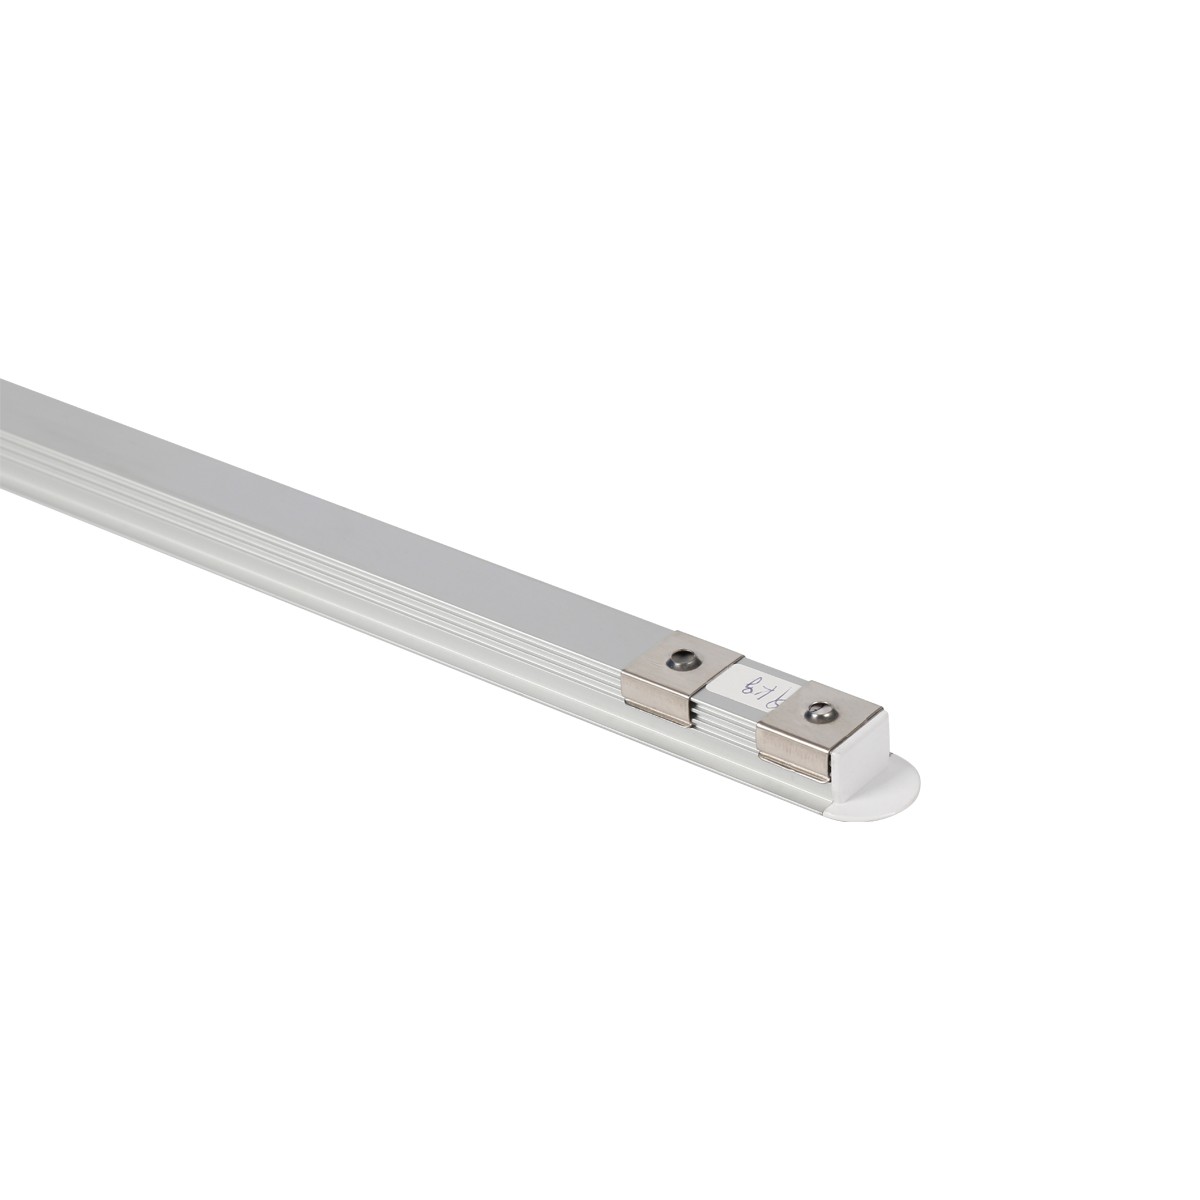 Embedded LED rigid light bar brand display cabinet with LED light bar wardrobe cabinet light